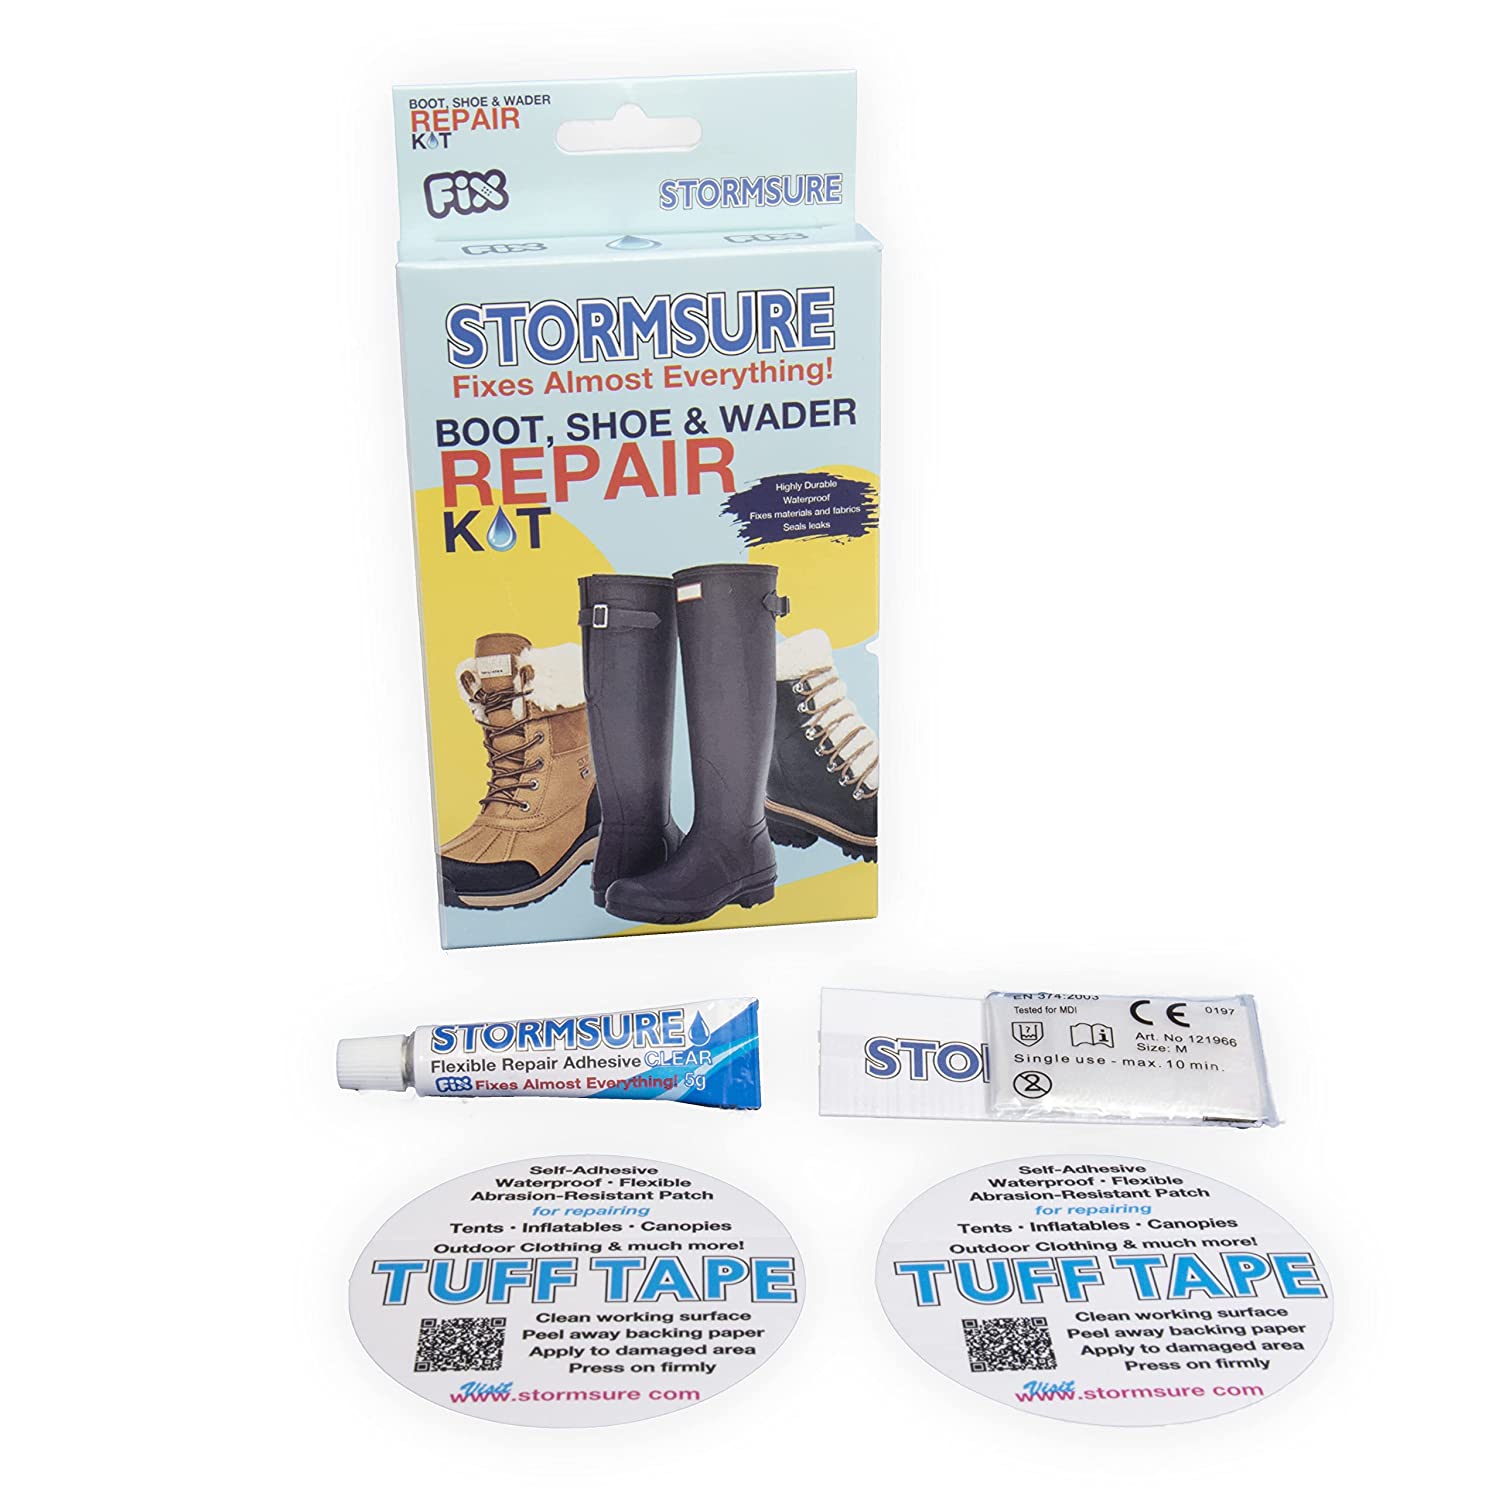 Boot, Shoe & Wader Repair Kit by Stormsure